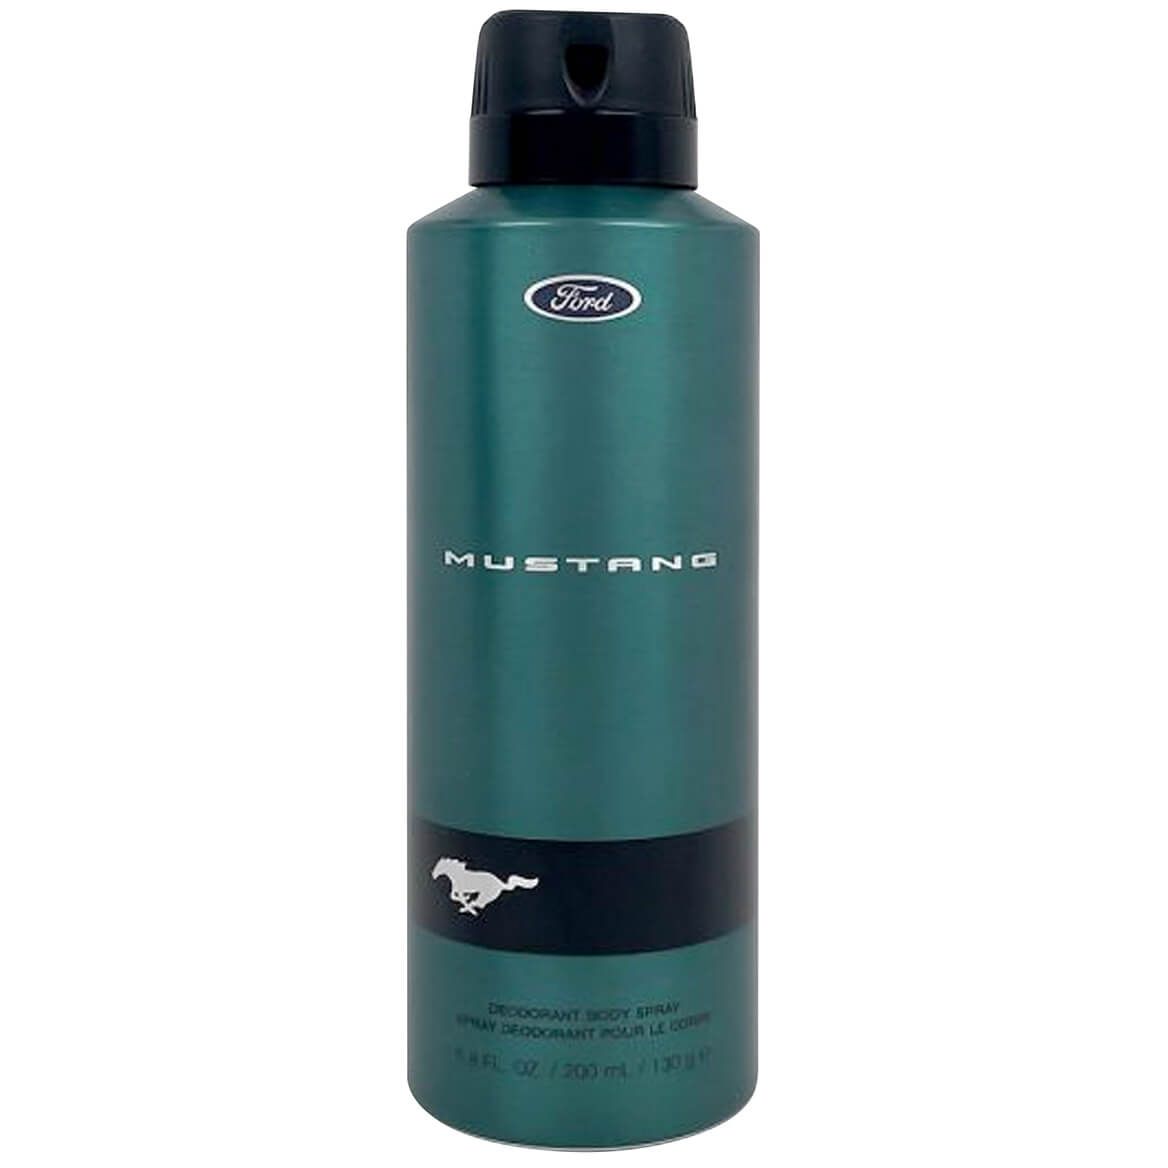 Mustang Green for Men Body Spray, 6.8 fl. oz. + '-' + 377301